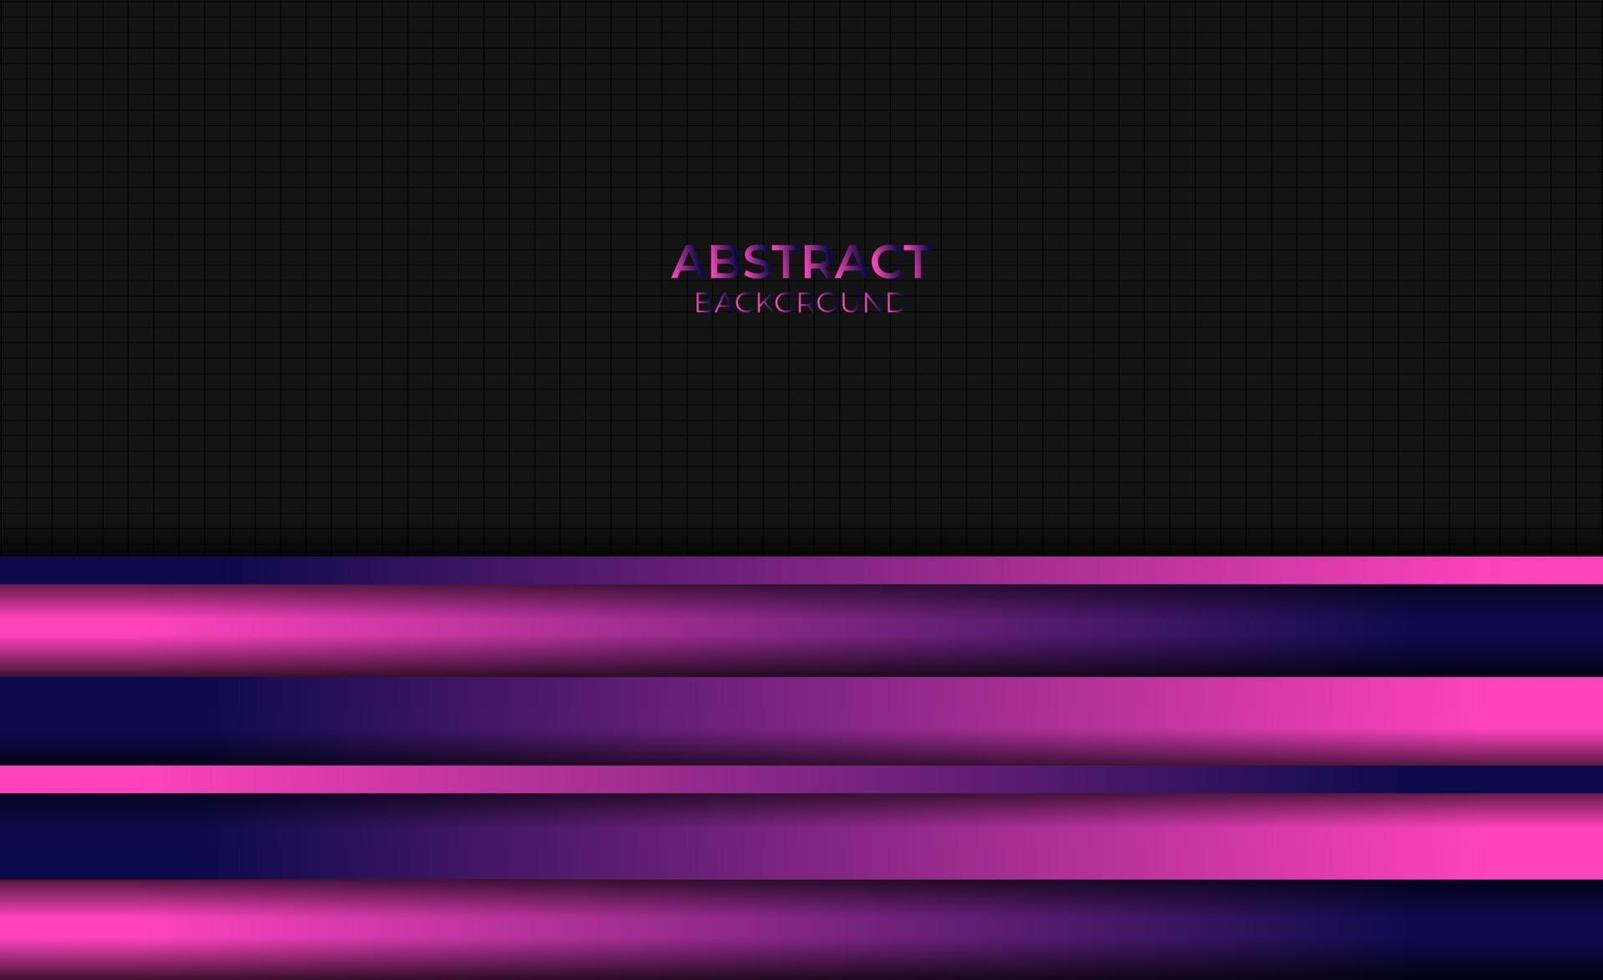 diseño de fondo rosa púrpura degradado de estilo abstracto vector